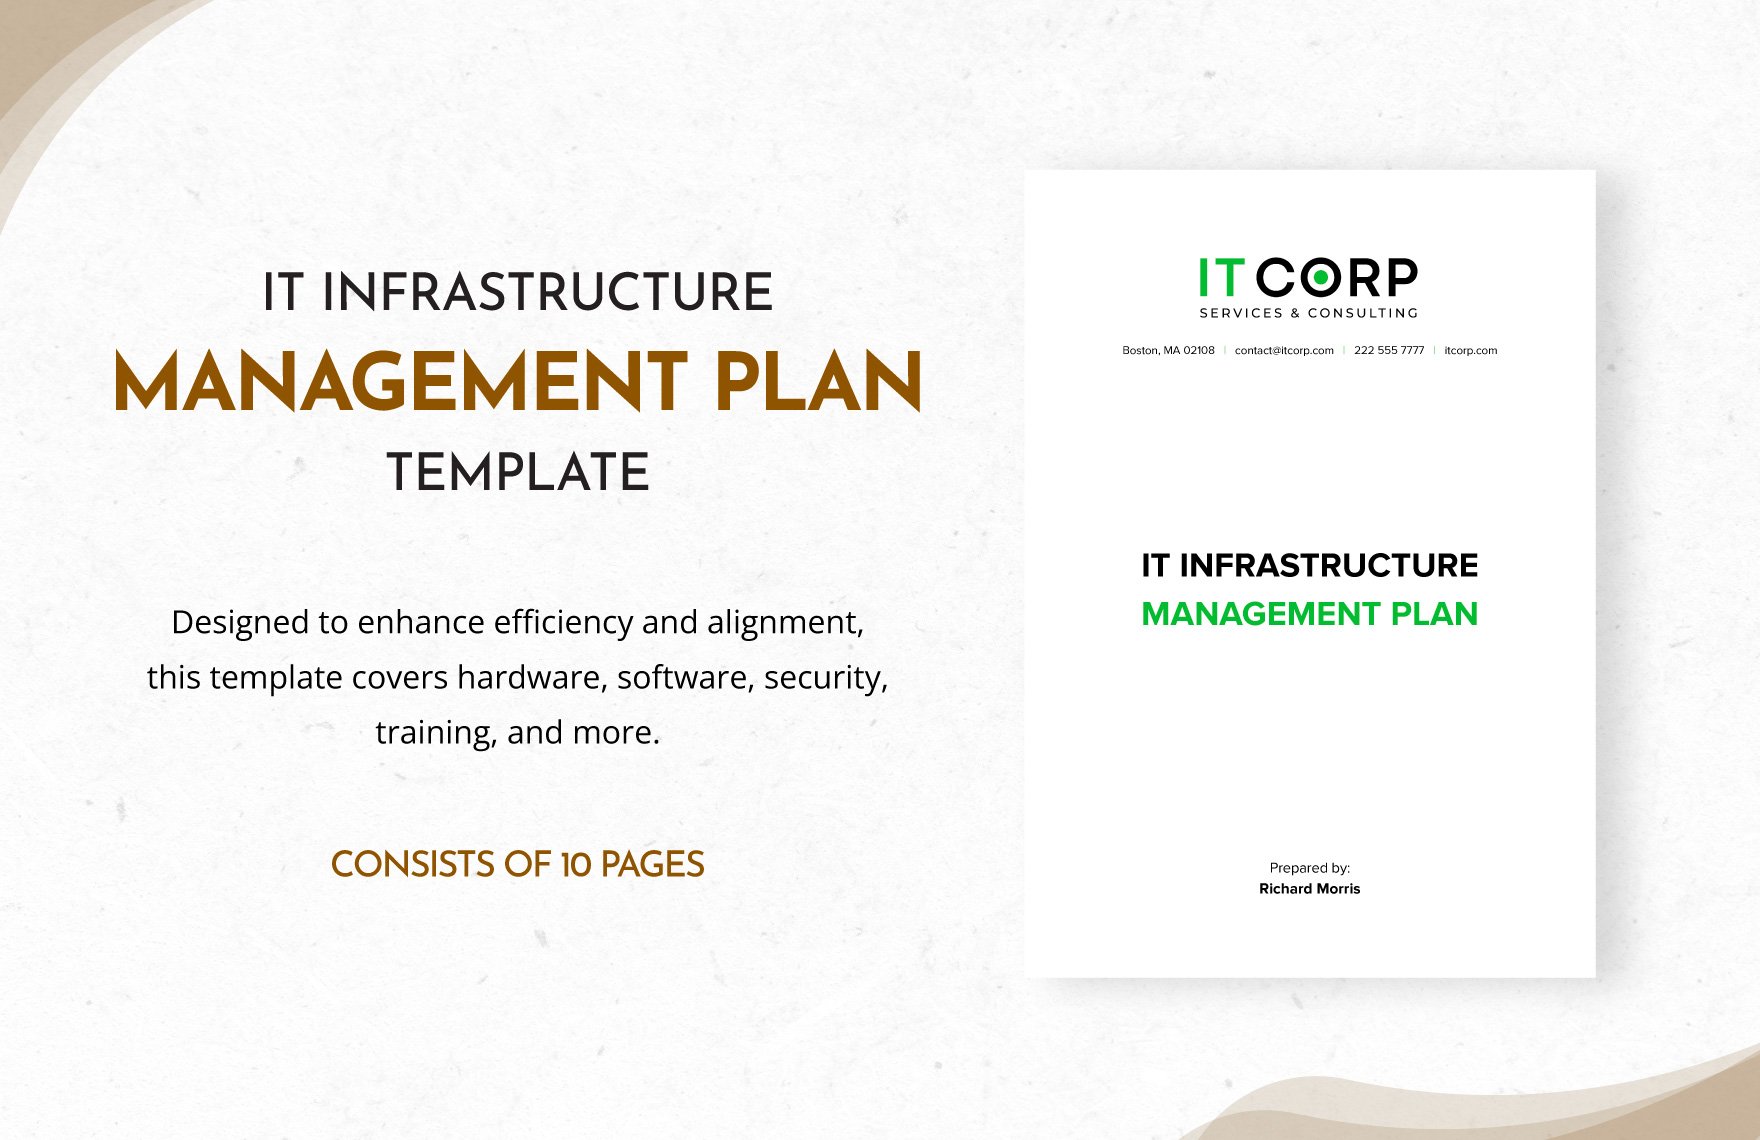 IT Infrastructure Management Plan Template